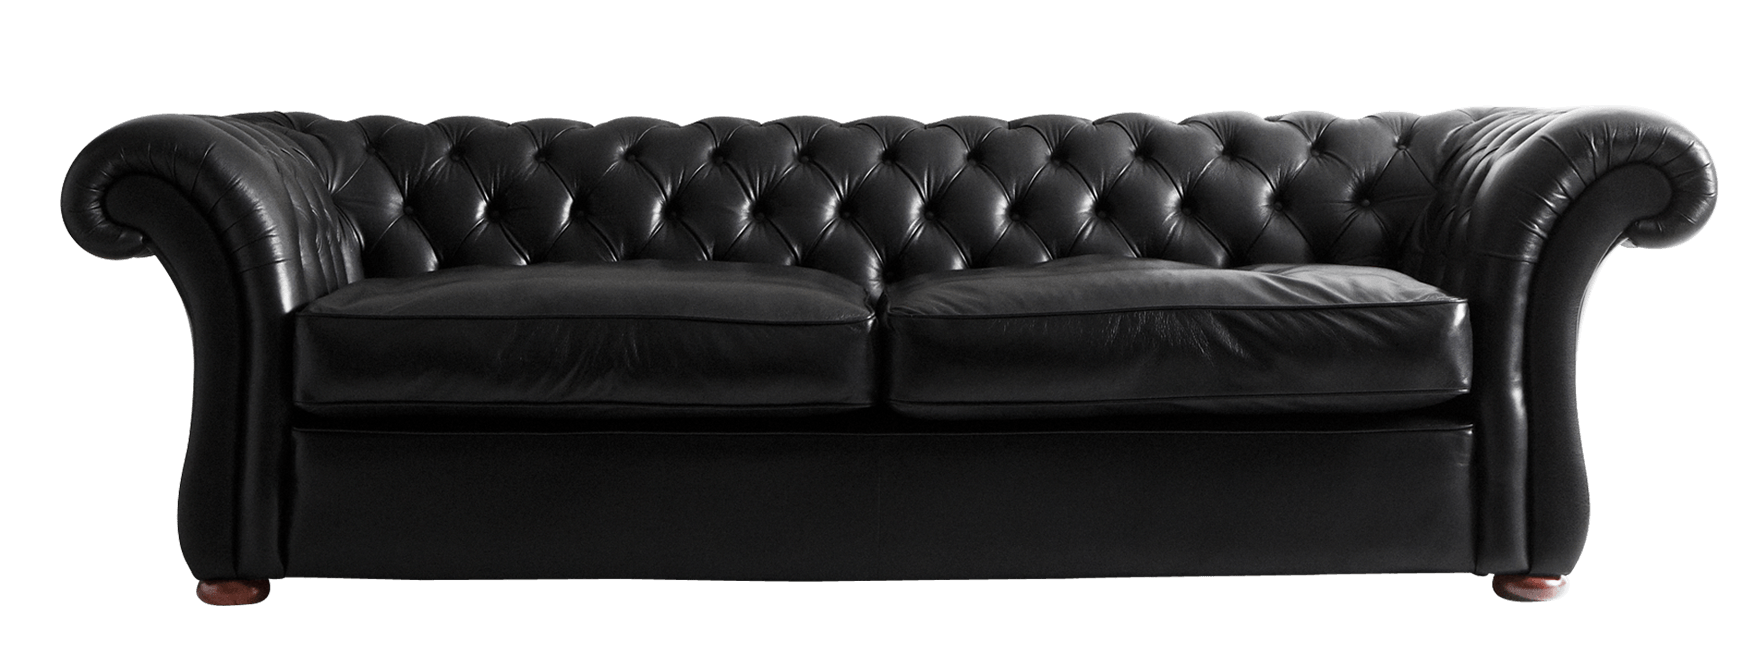 wrinkled leather sofa nice